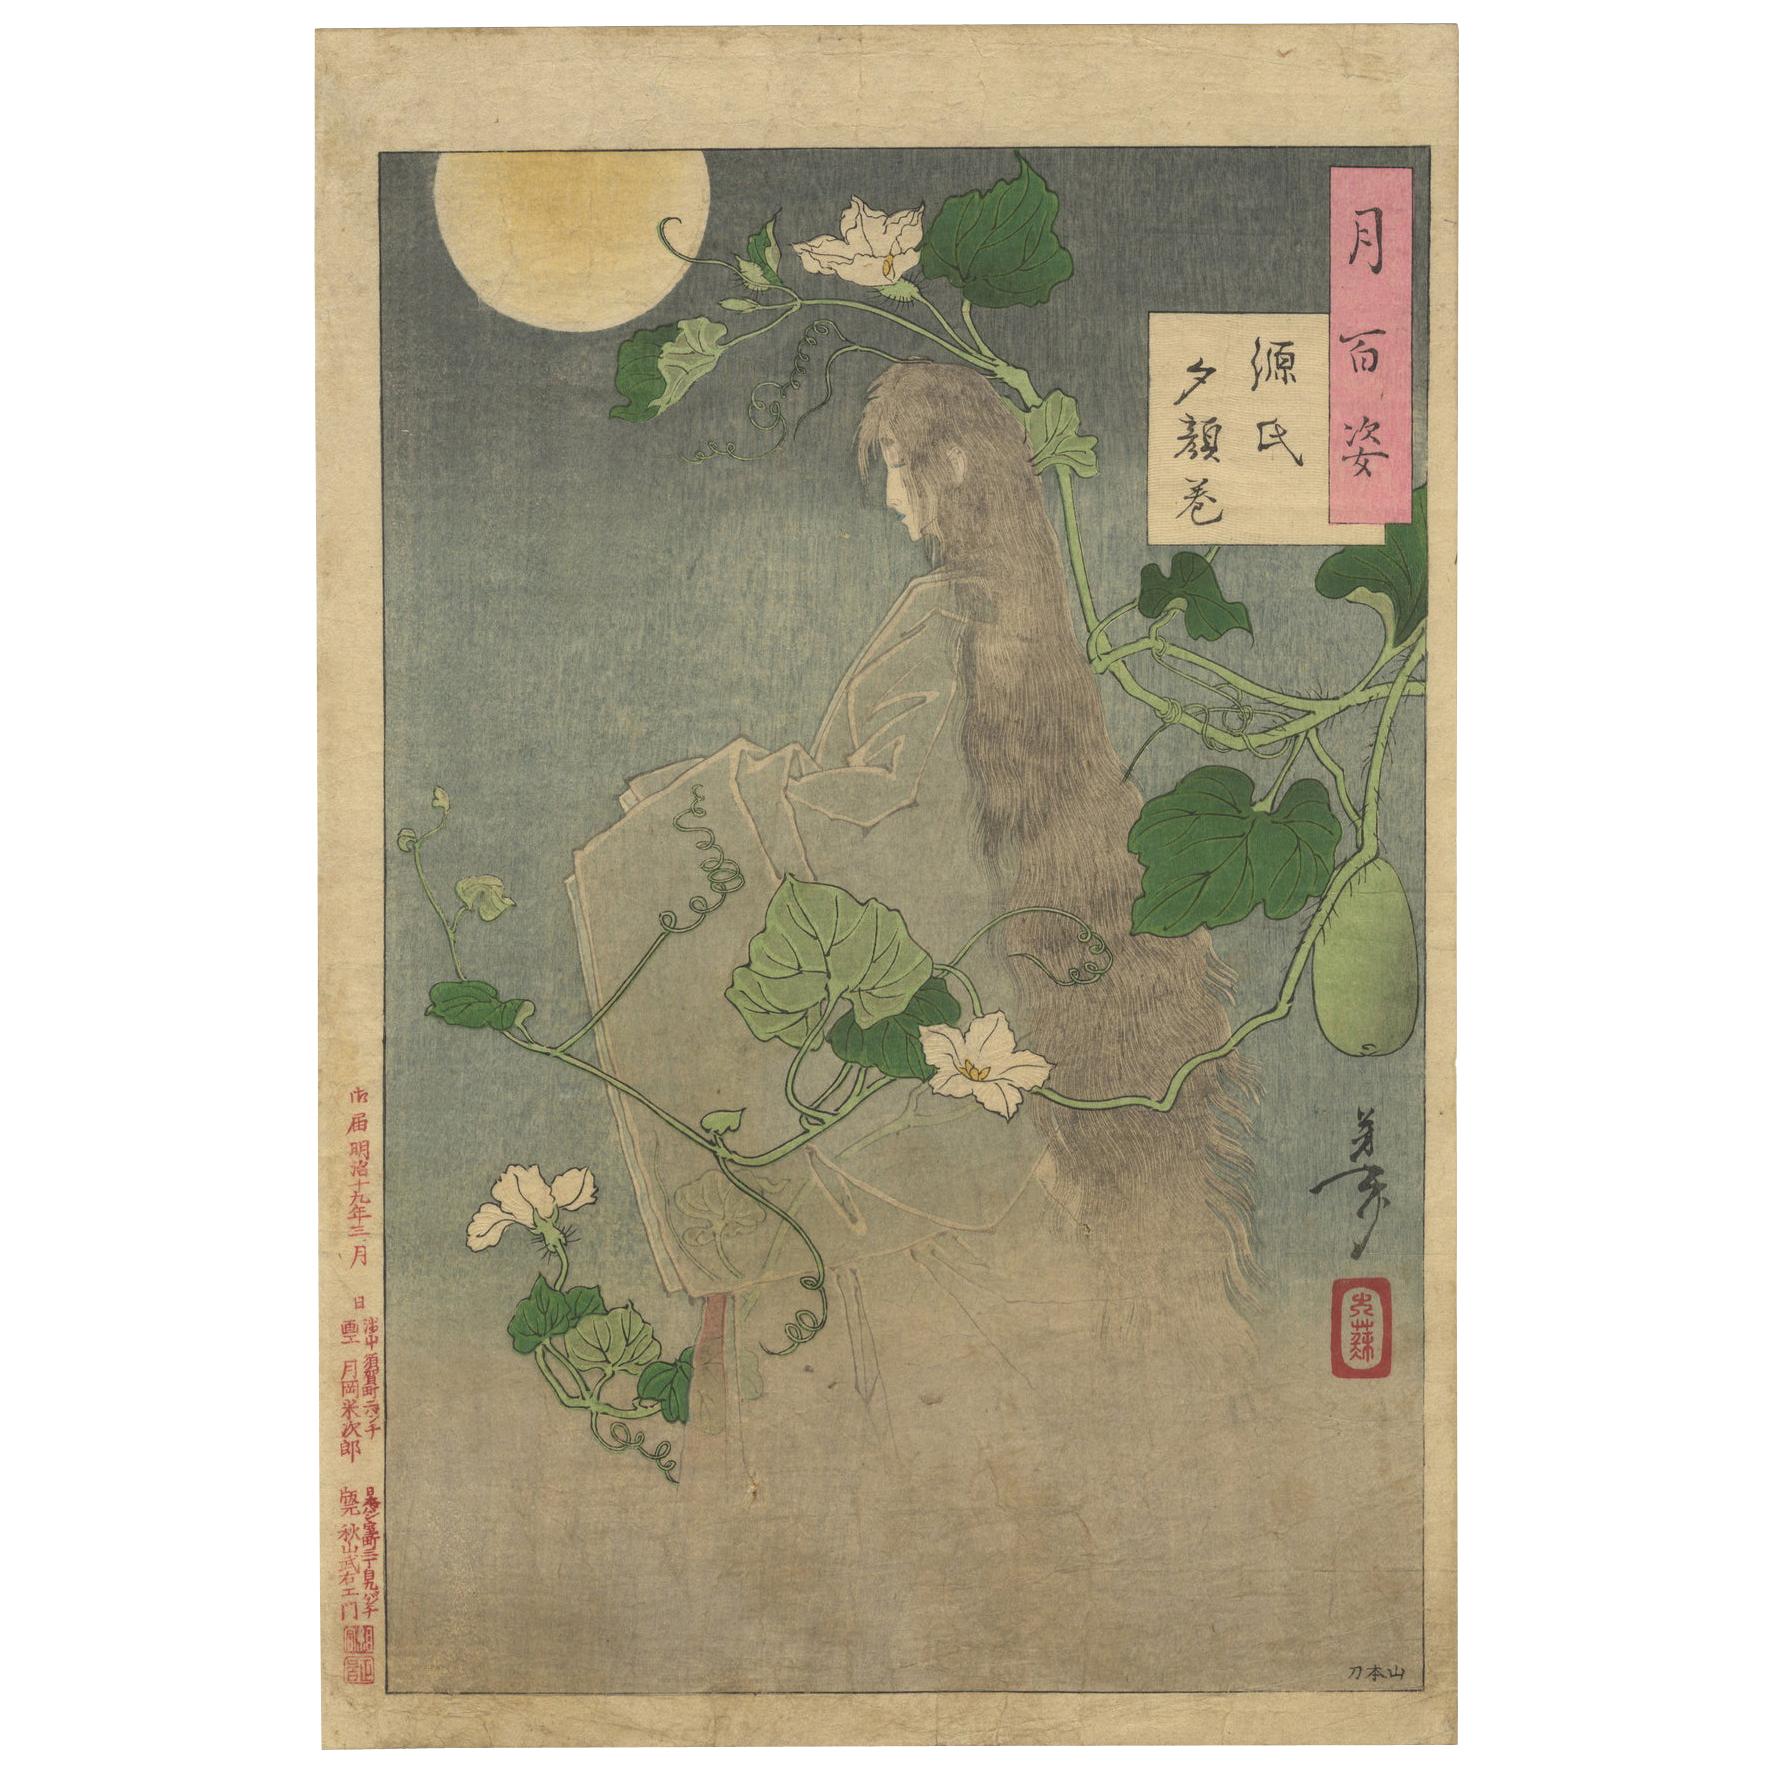 Yoshitoshi, One Hundred Aspects of the Moon, Yugao, The Tale of Genji, Meiji For Sale